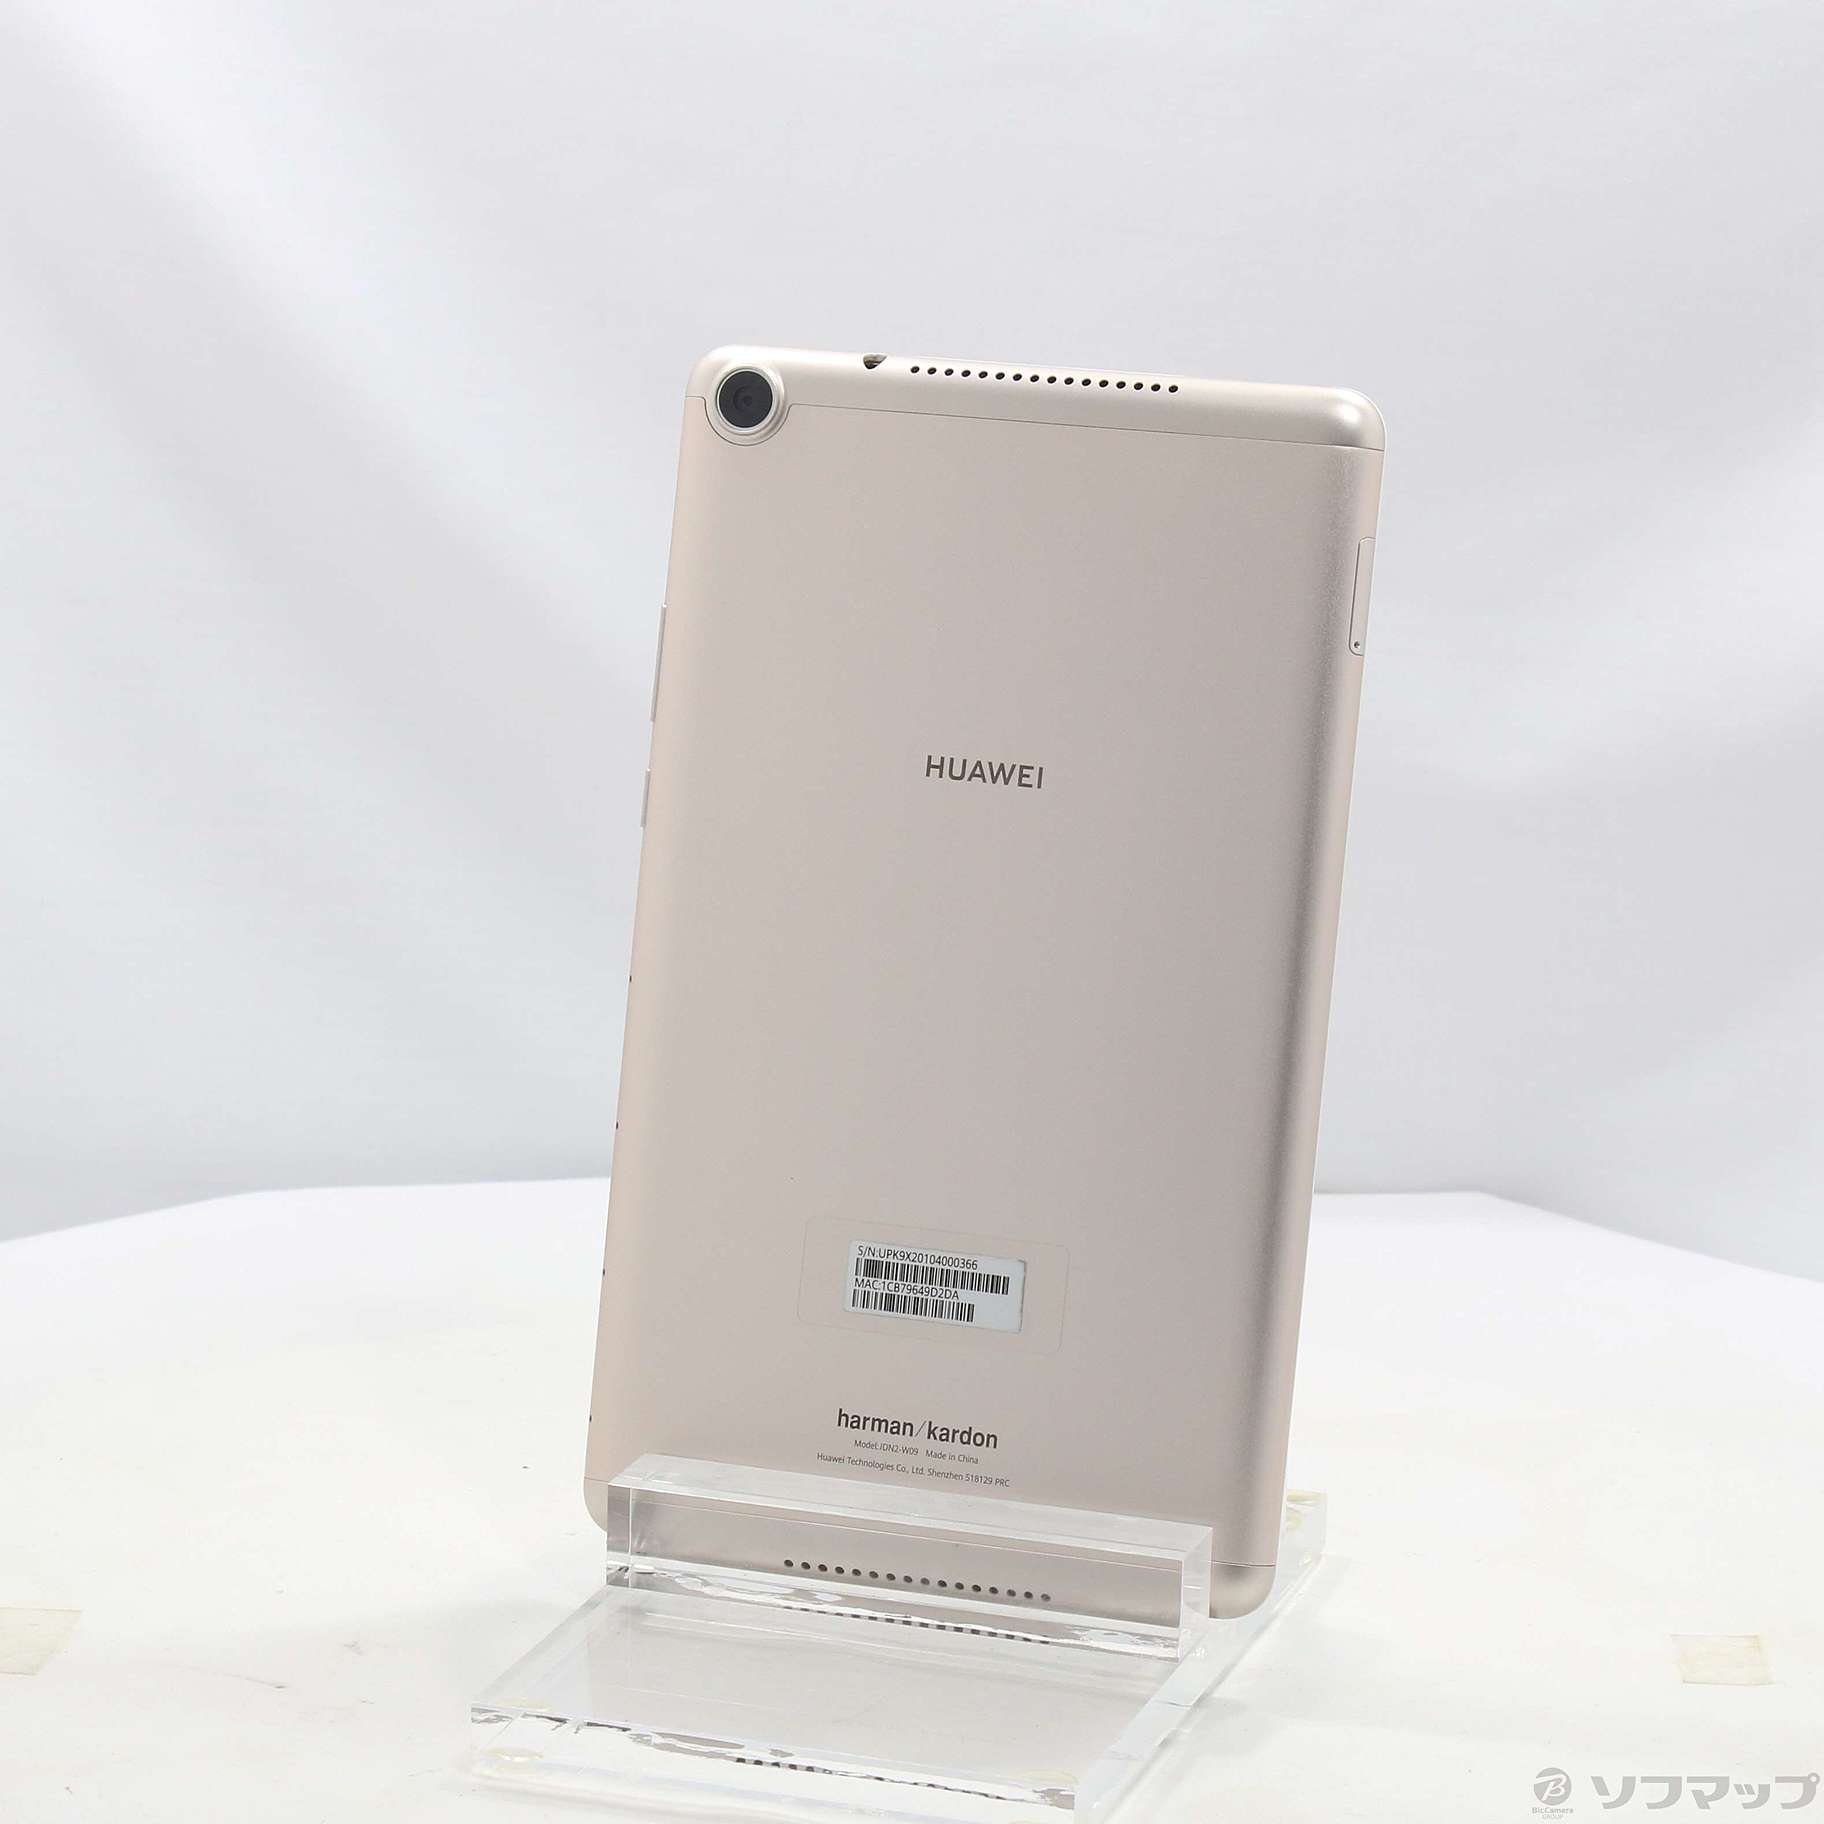 新品 Huawei MediaPad M5 lite 8 WiFi 64GB